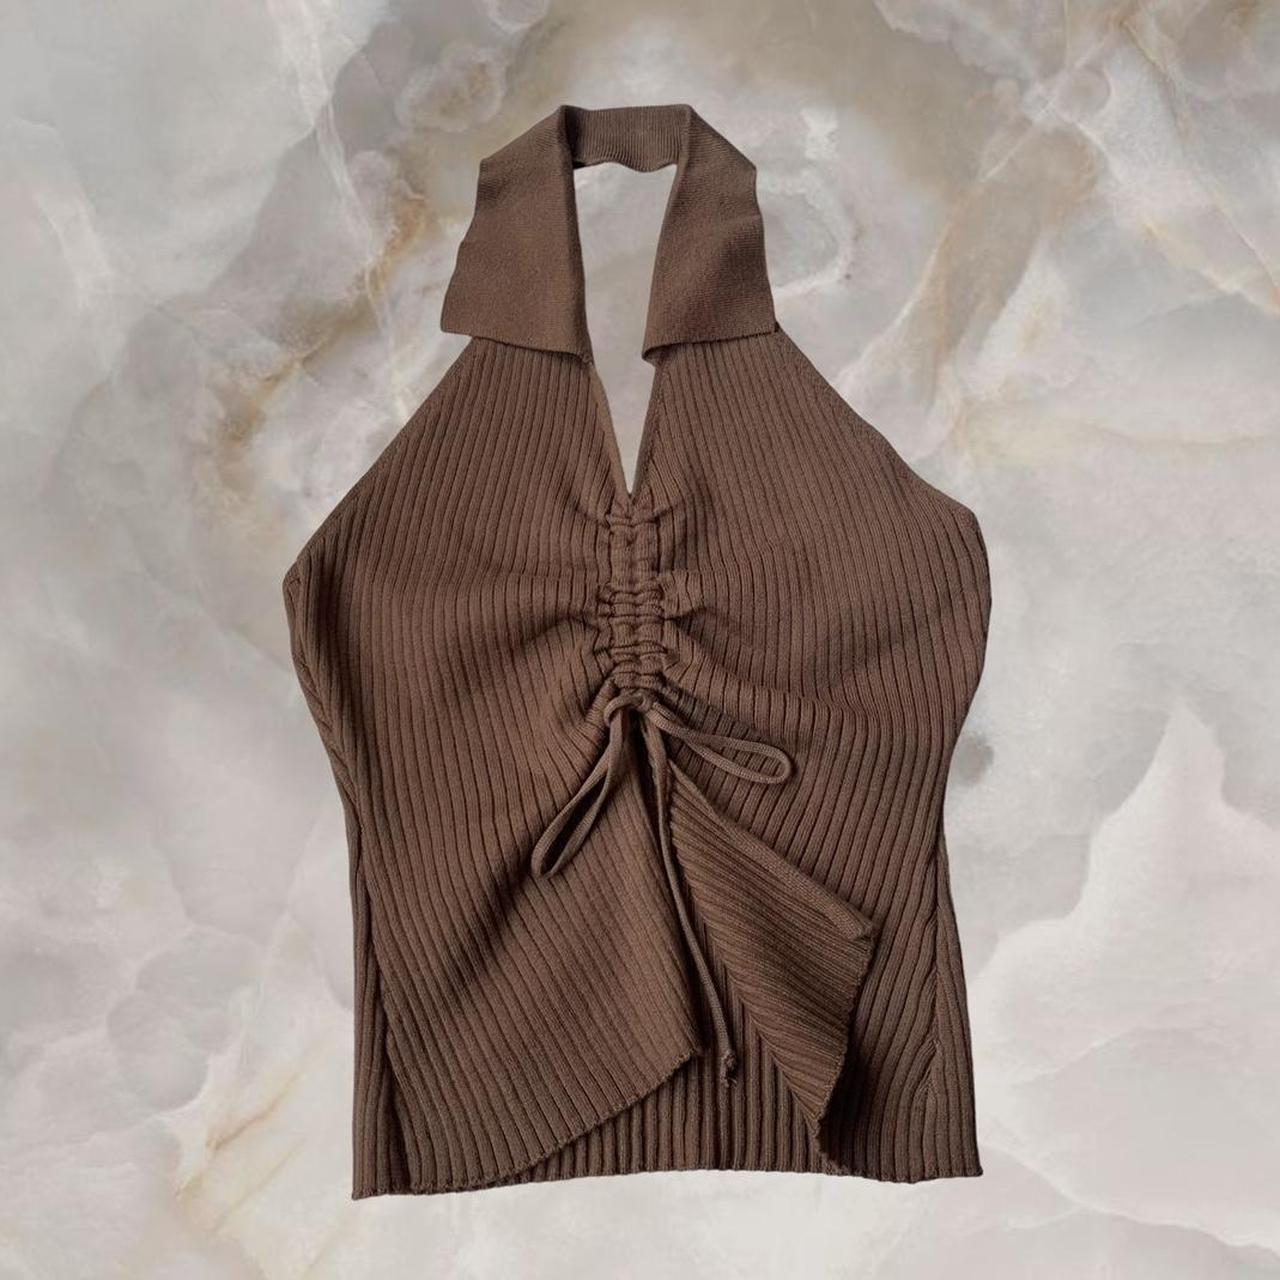 Full Circle Trends Women's Tan and Brown Vest (2)